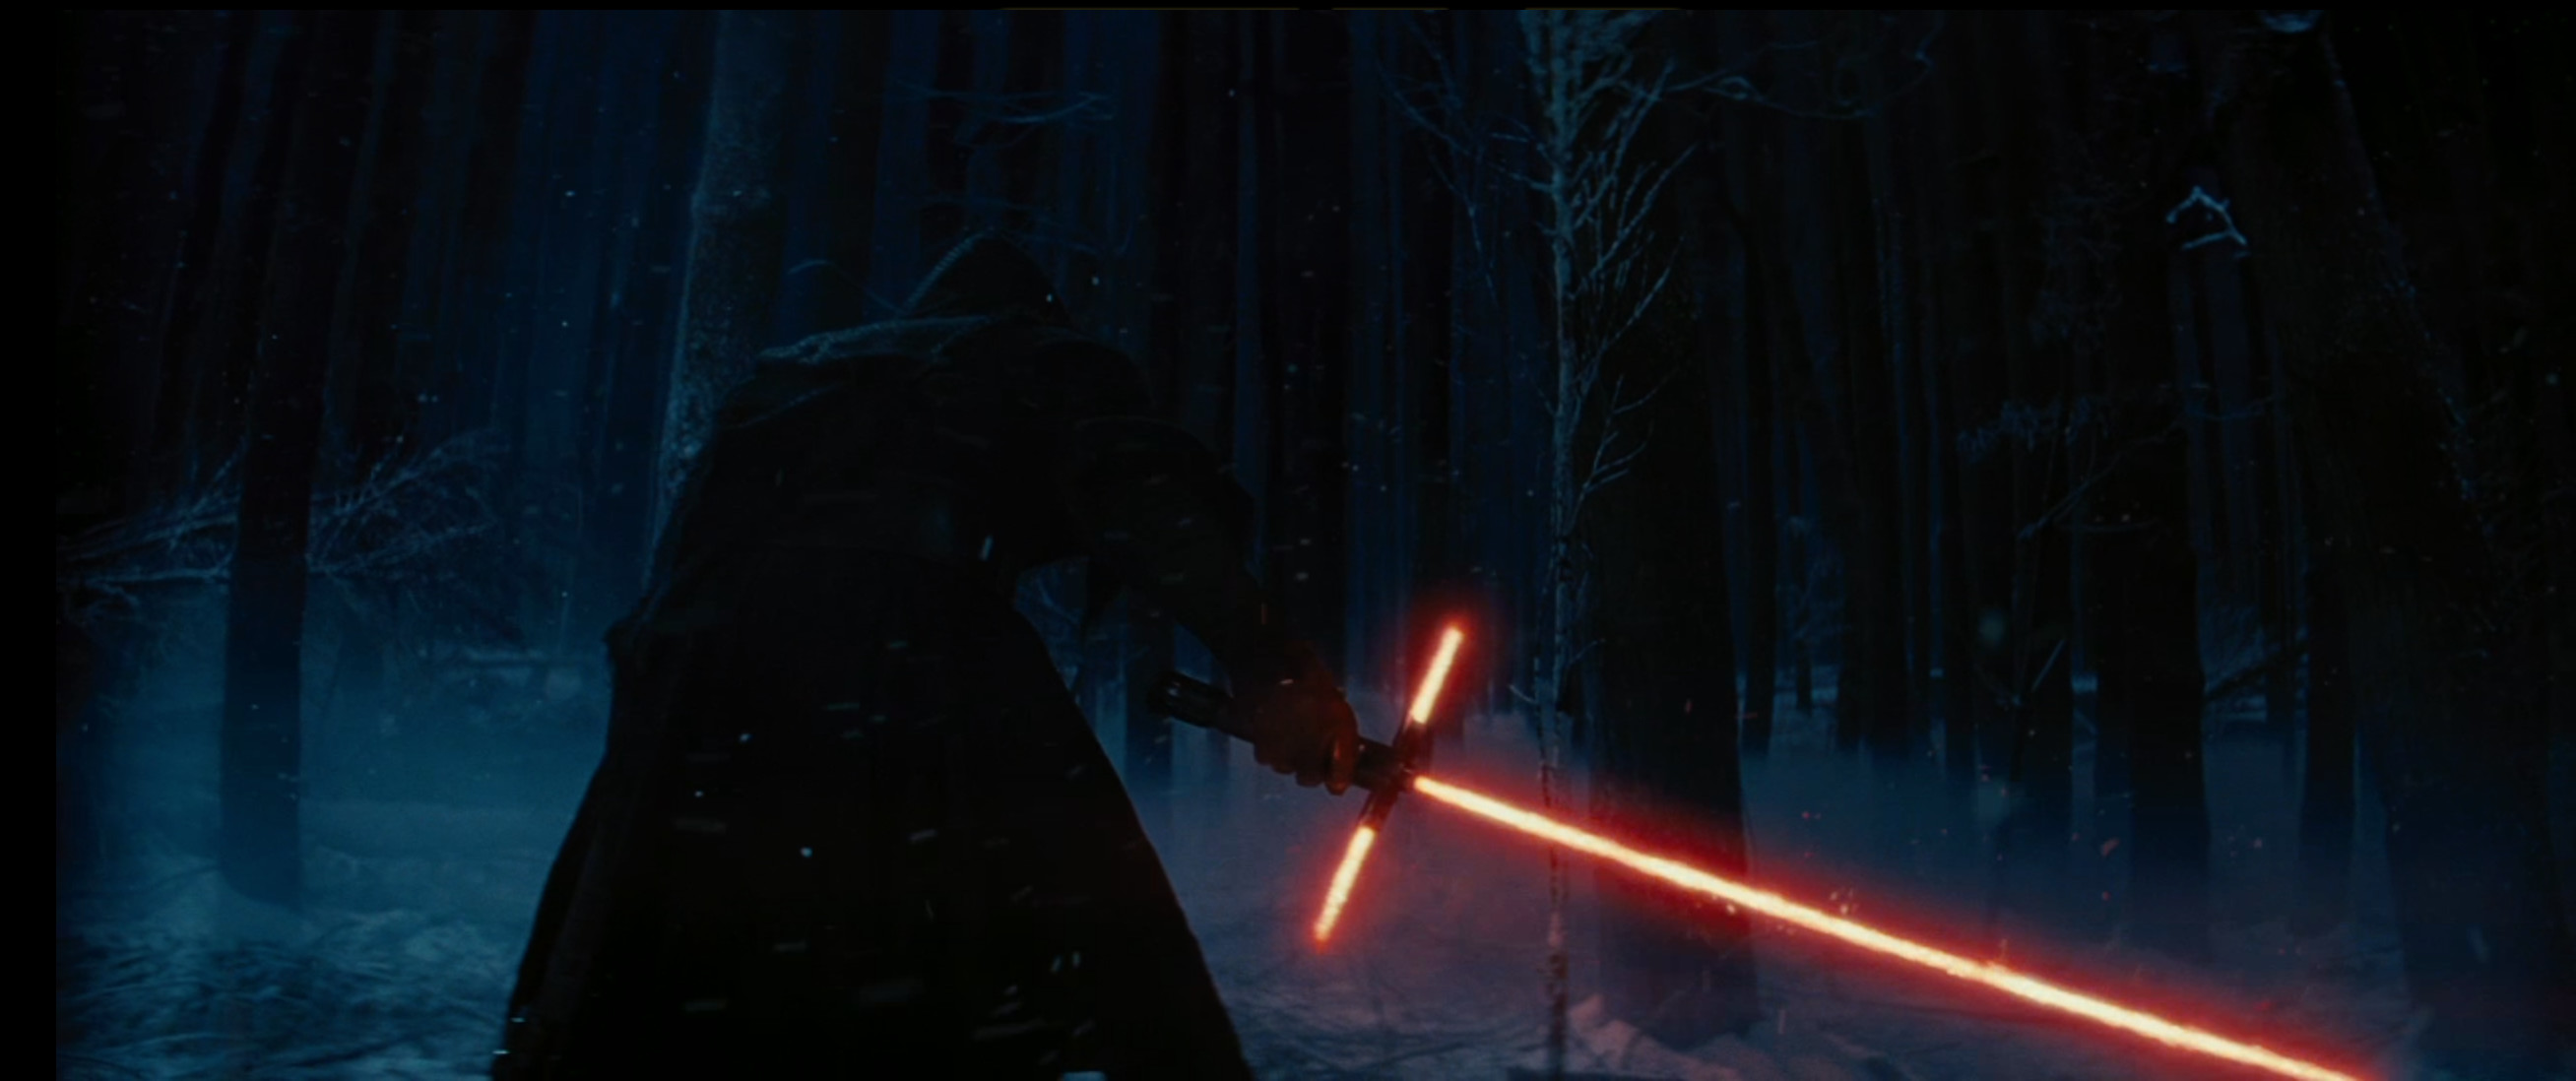 Star wars the force awakens image 1 lightsaber